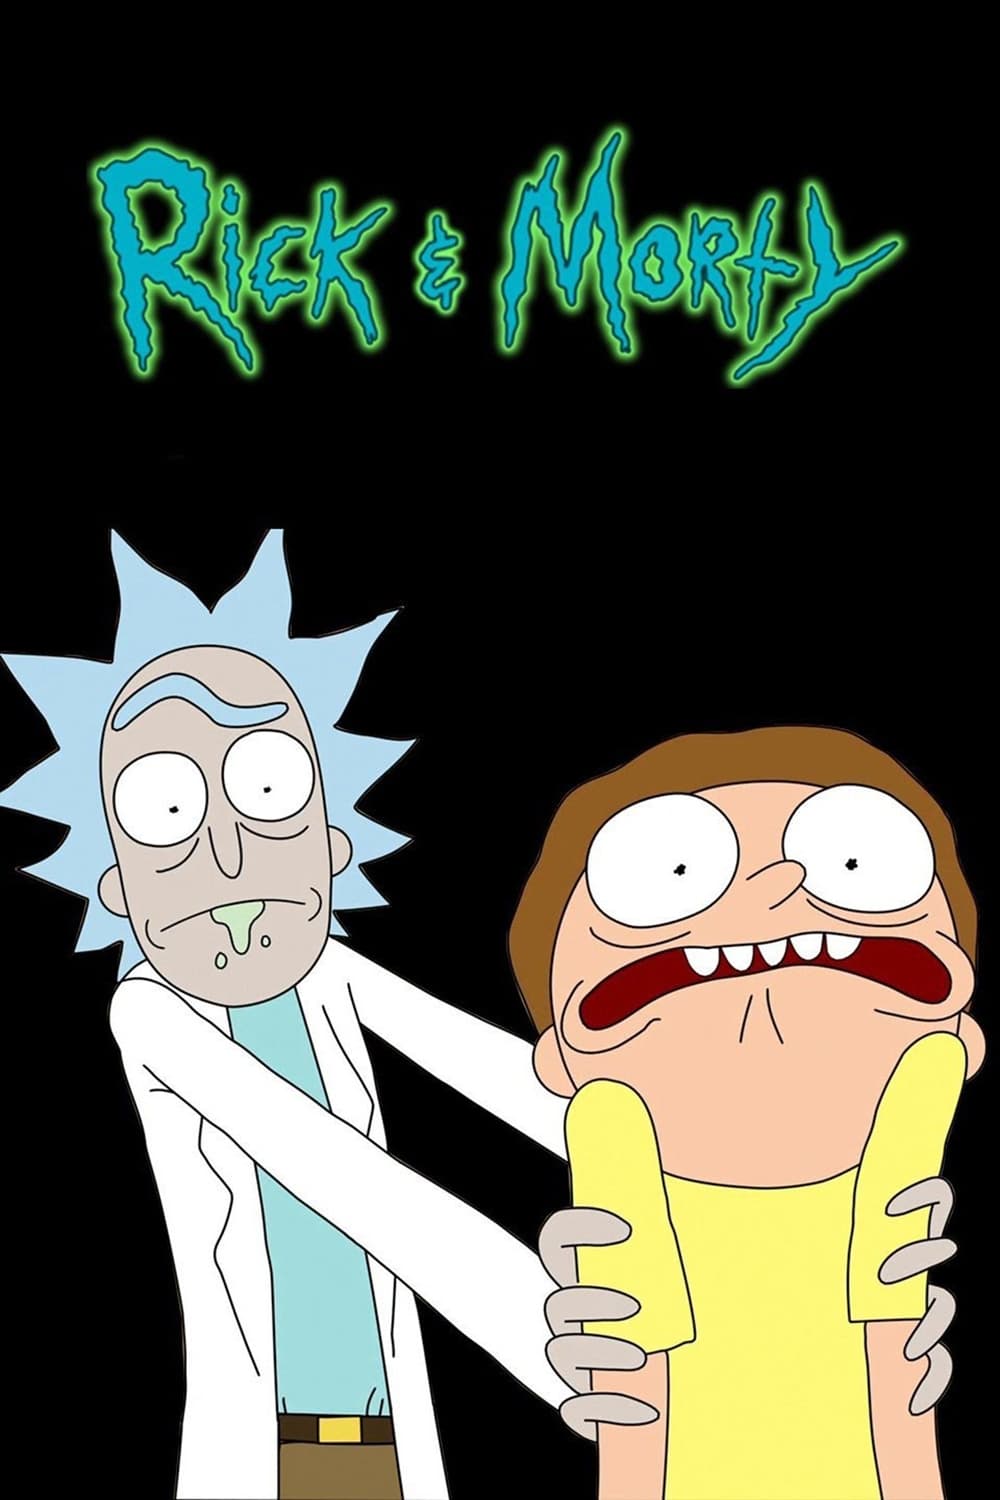 Rick & Morty S6